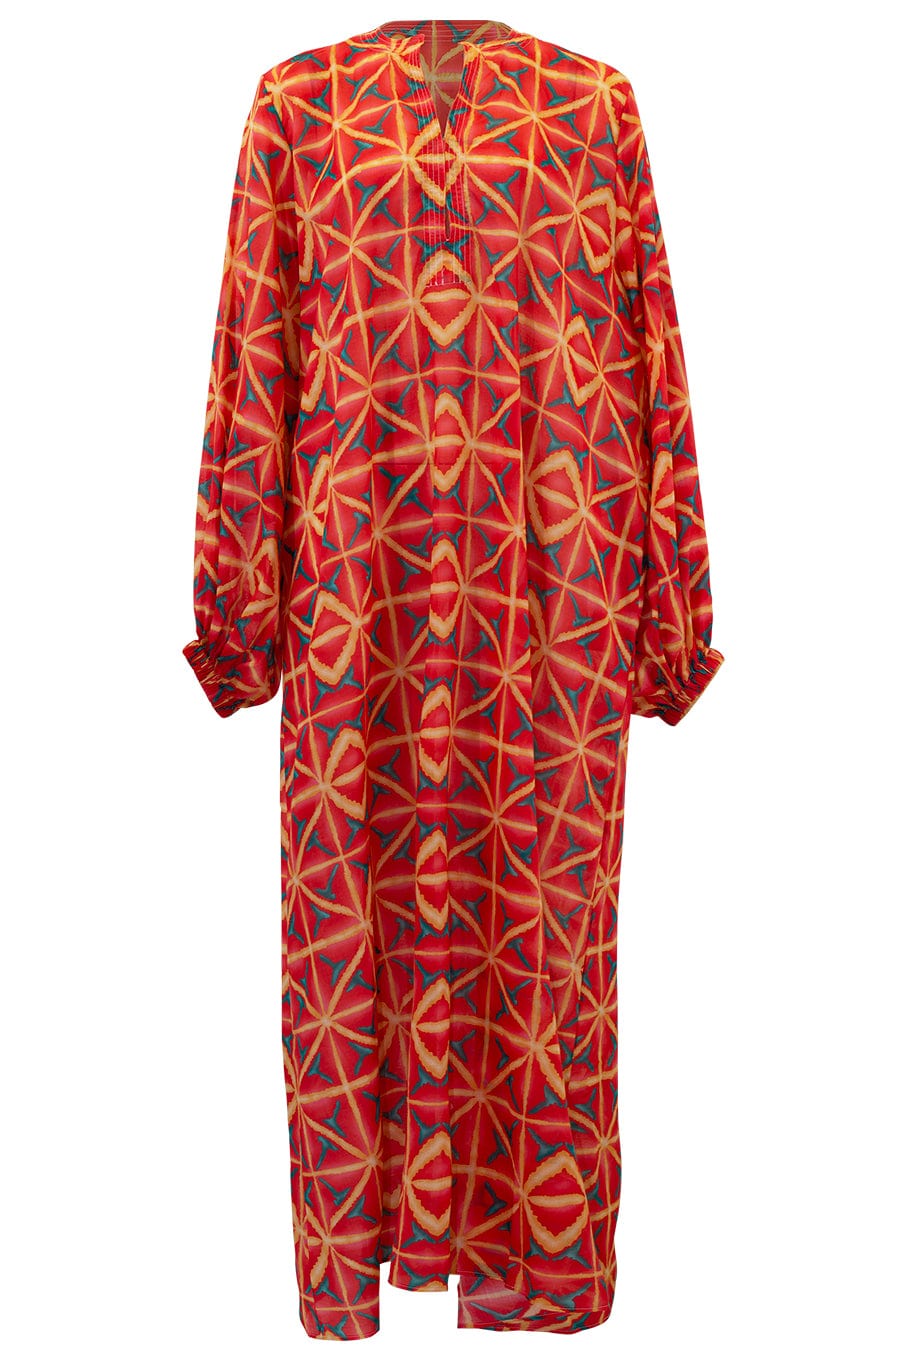 SUNBUNCH-Ambra Long Sleeve V Neck Dress-RED MULTI